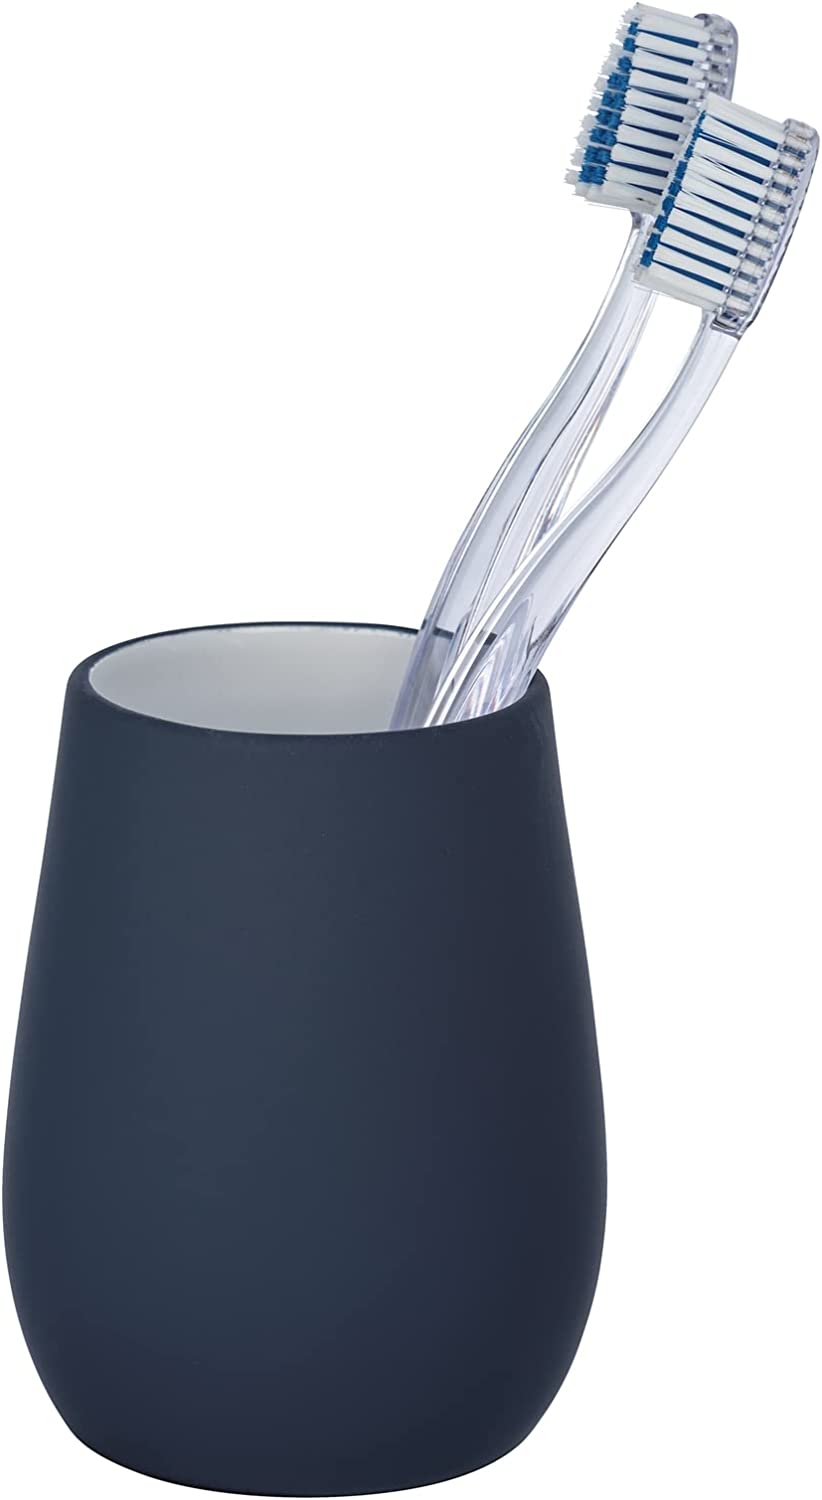 Zahnputzbecher Sydney Blau Matt, Keramik mit Soft-Touch Beschichtung - Zahnbürstenhalter für Zahnbürste und Zahnpasta mit Soft-Touch Beschichtung, Keramik, 8.5 x 11 x 8.5 cm, Blau Matt